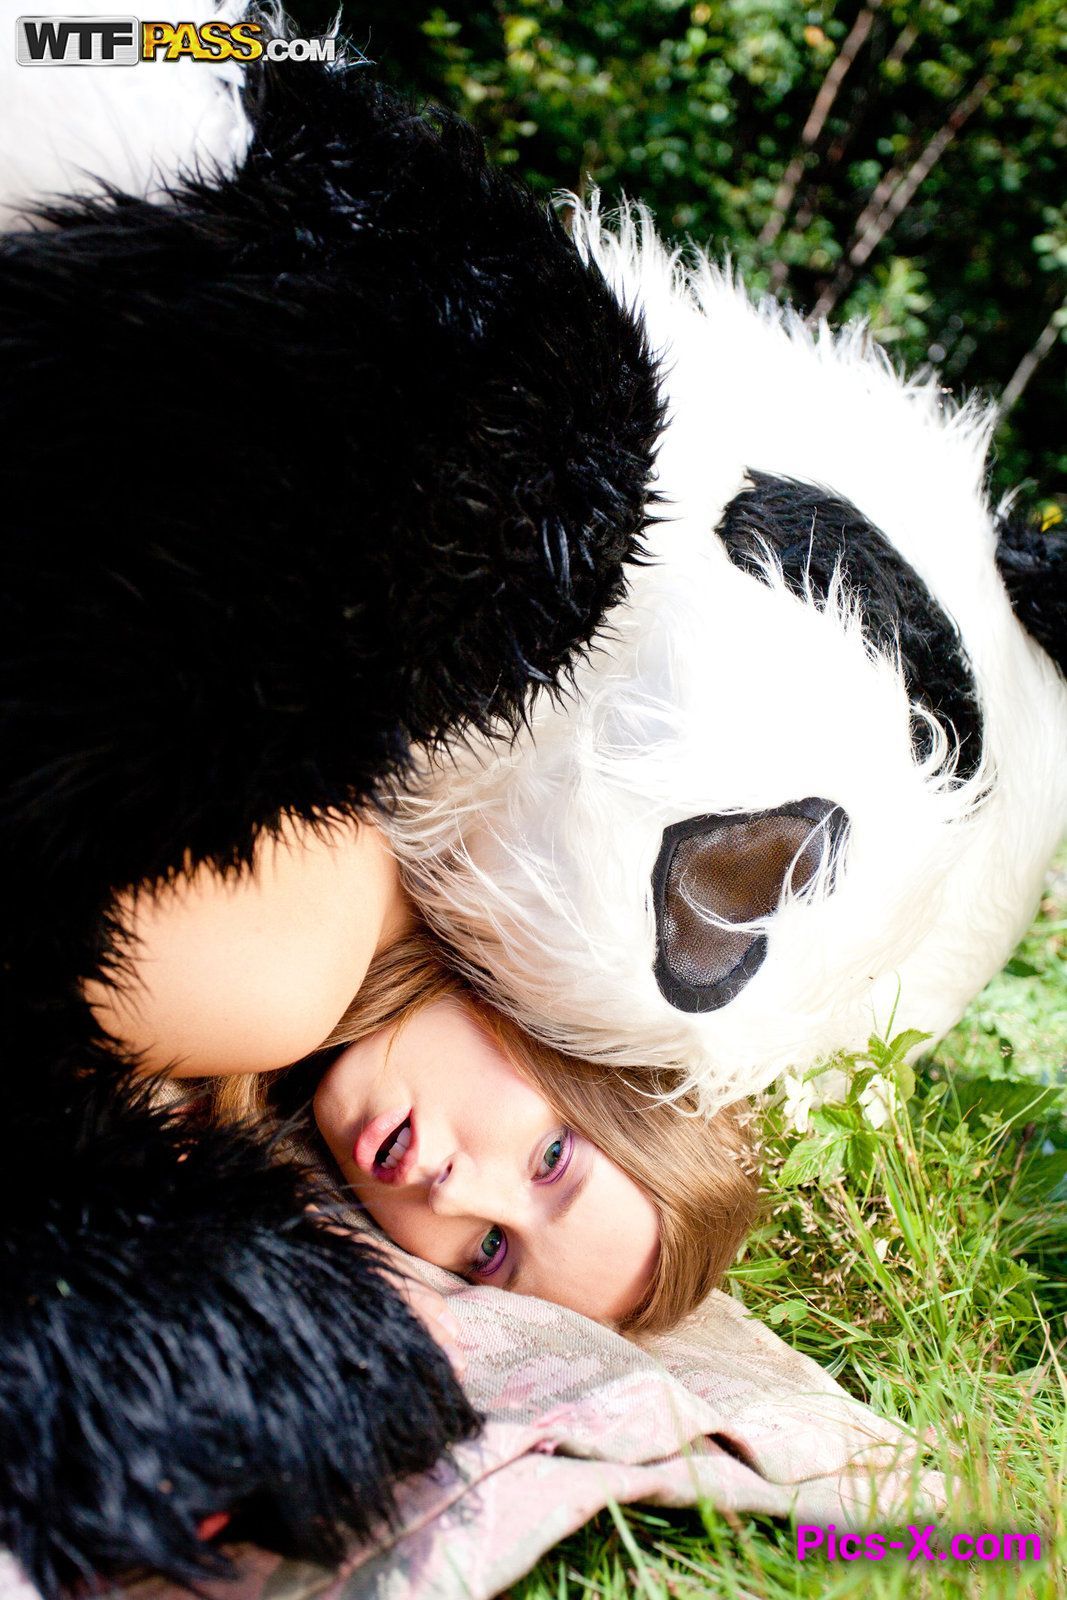 Wild sex to award a hero panda - Panda Fuck - Image 53